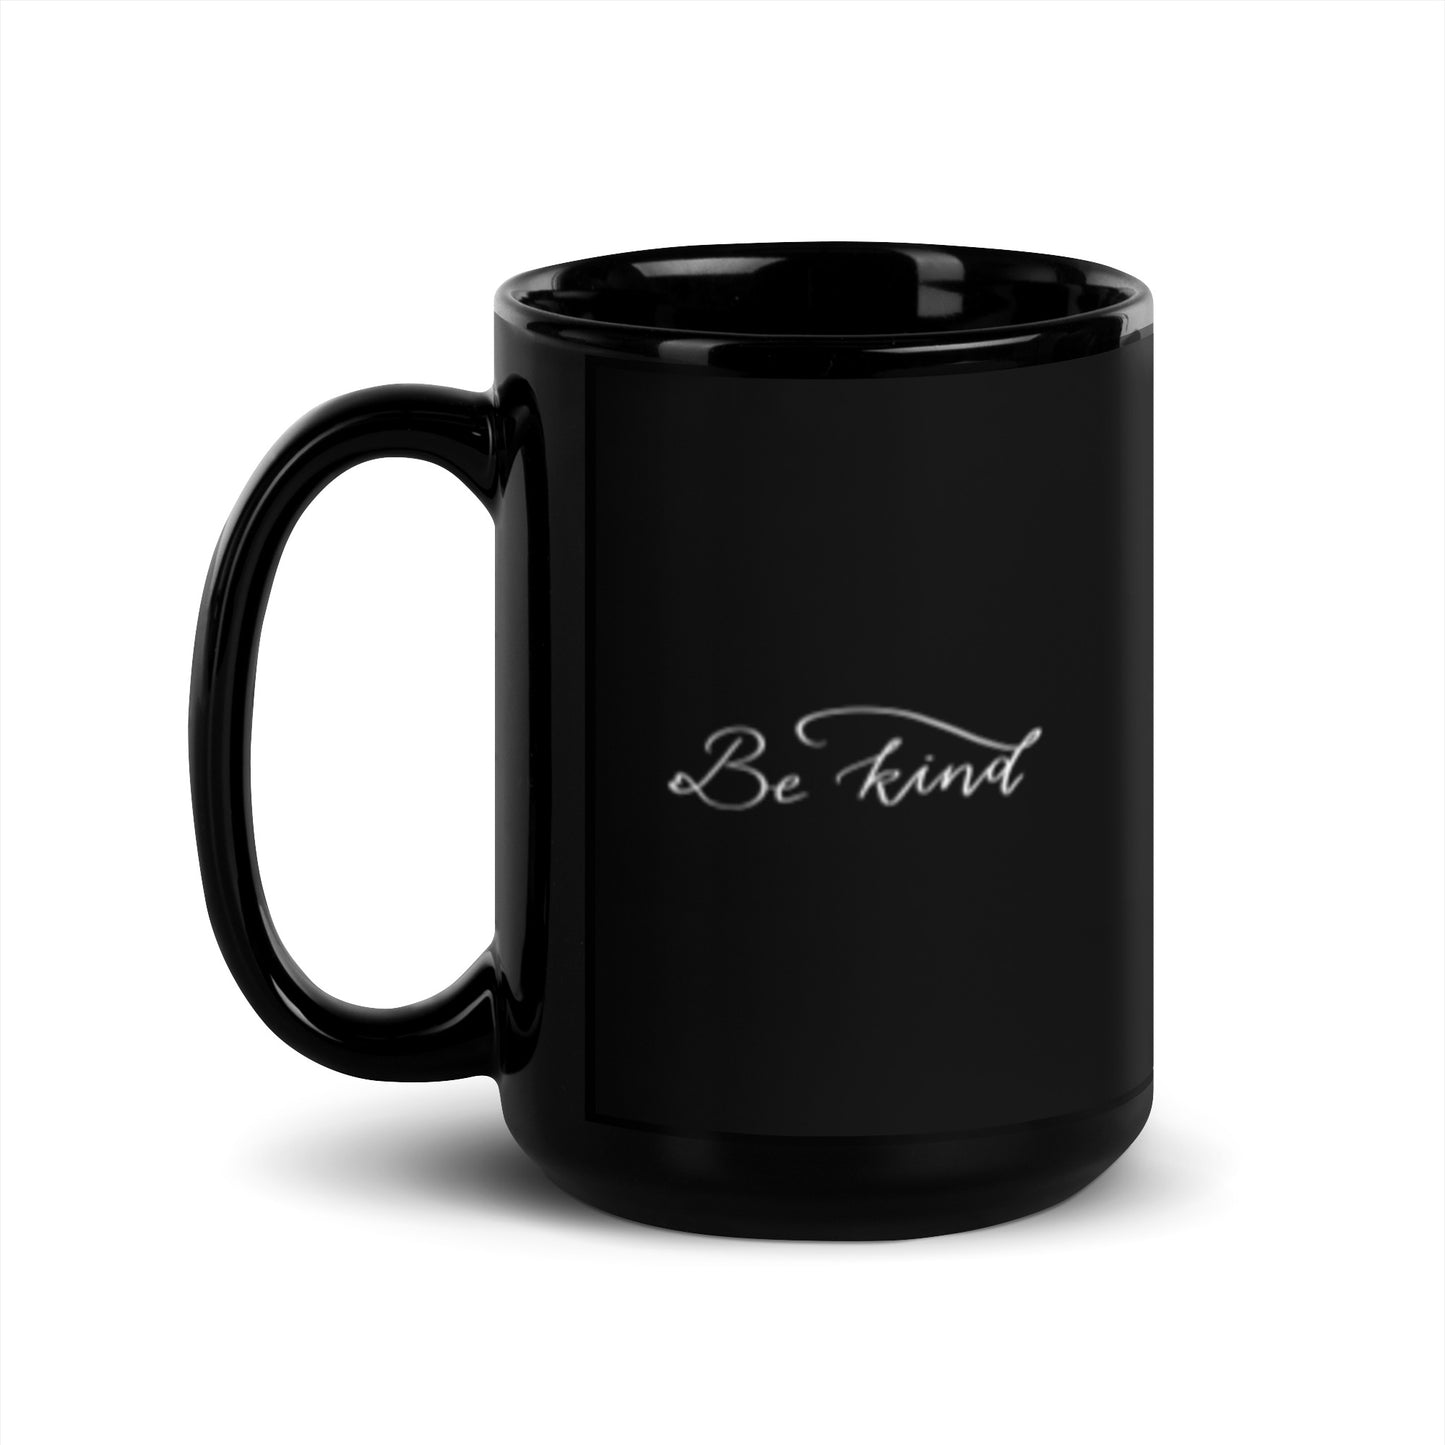 Ceramic mug "Be kind"